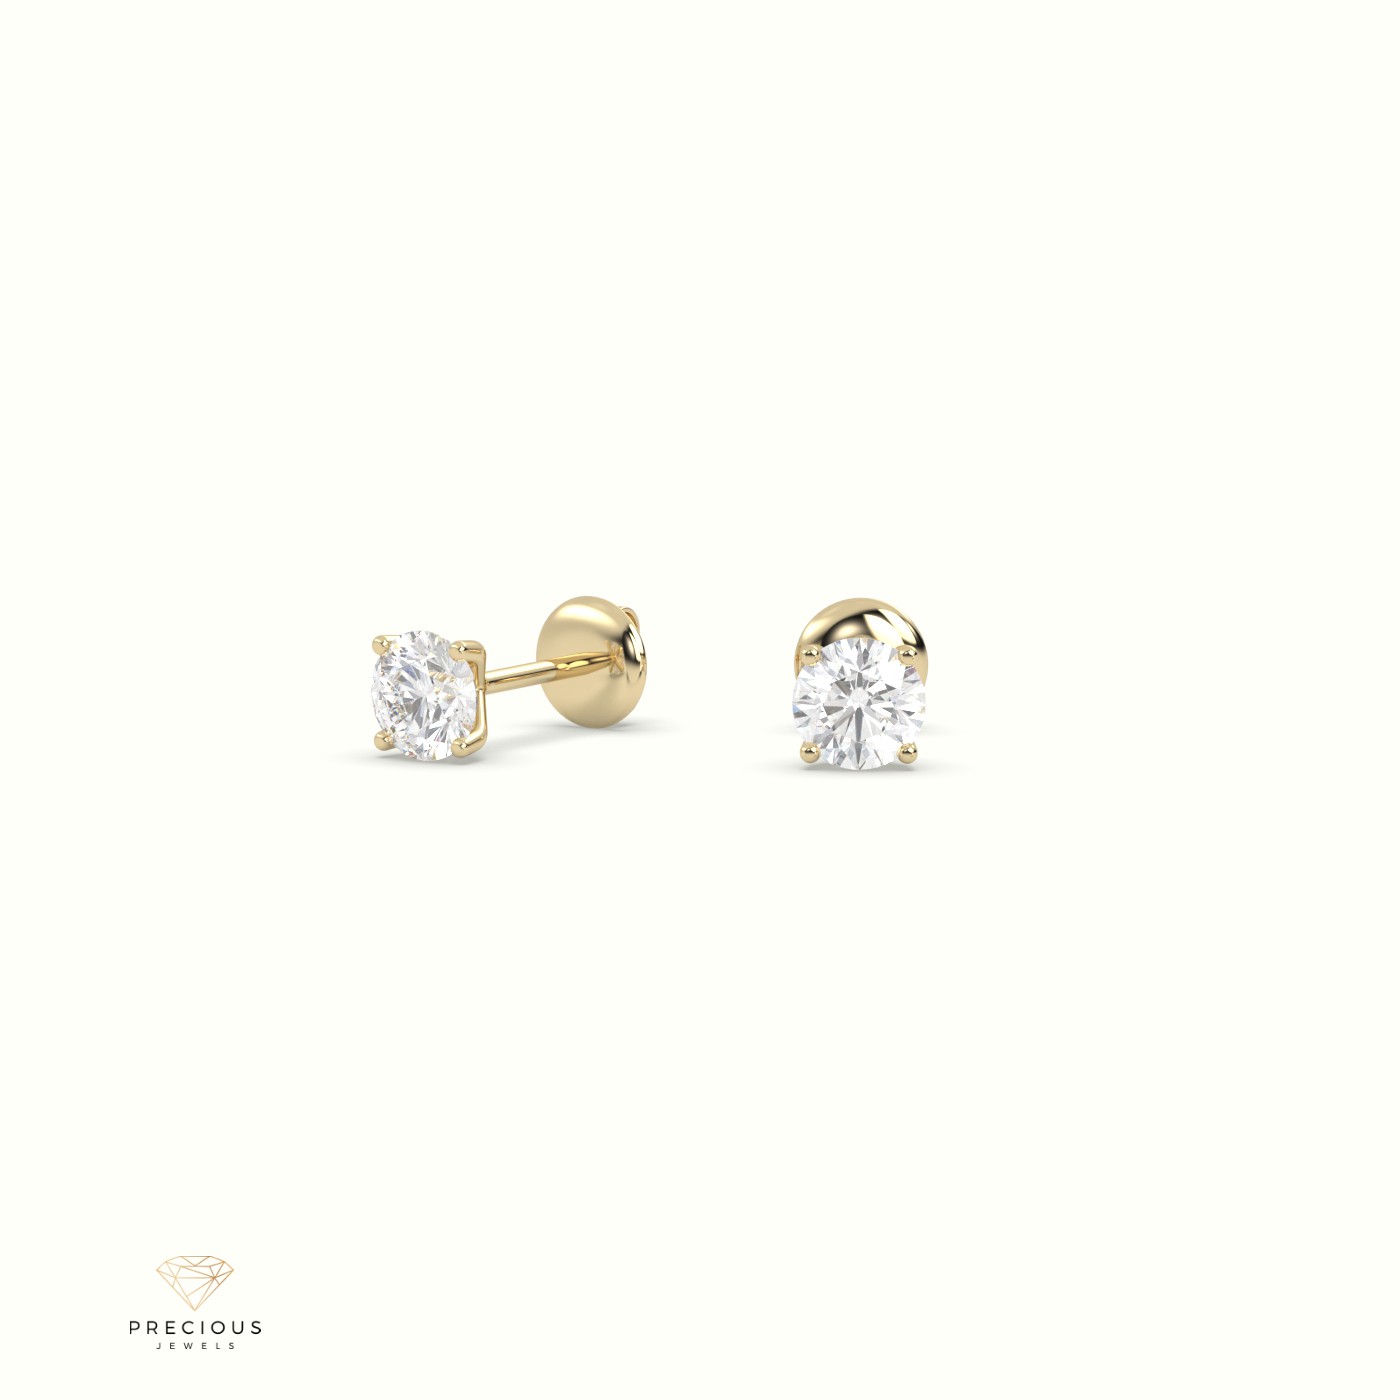 18k yellow gold 4 prongs round diamond studs earrings - free setting